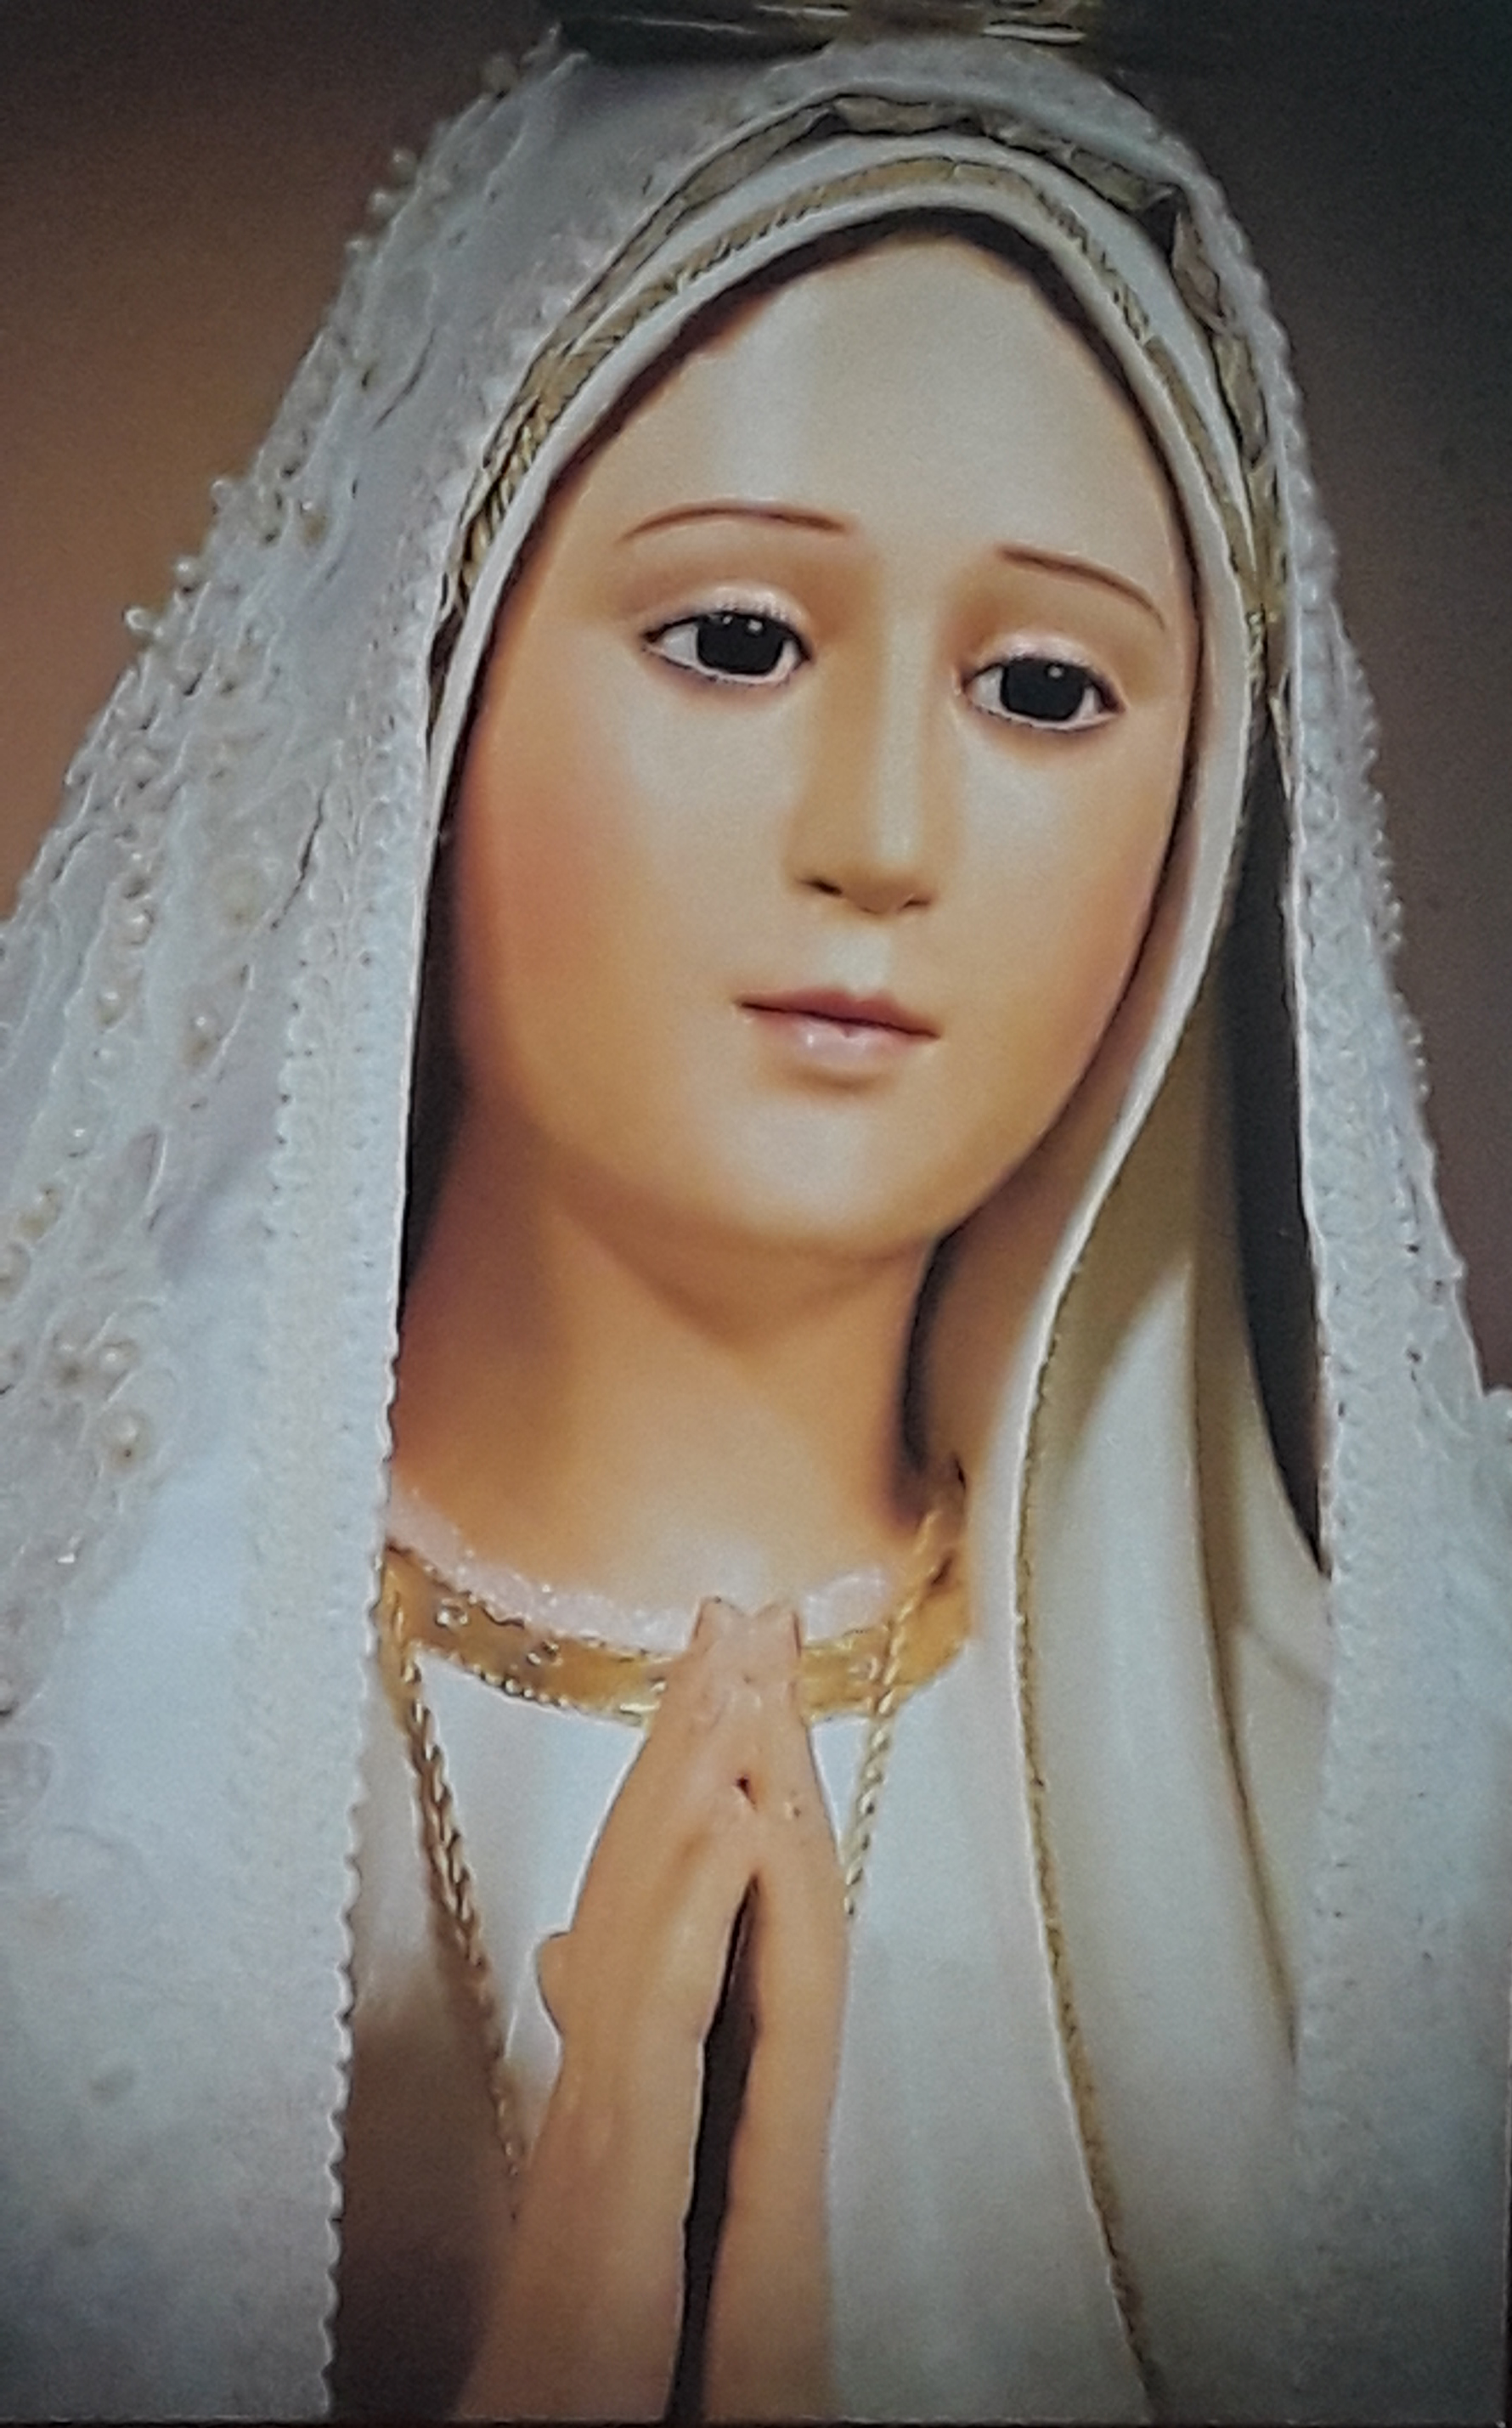 Our Lady Of Fatima image 2